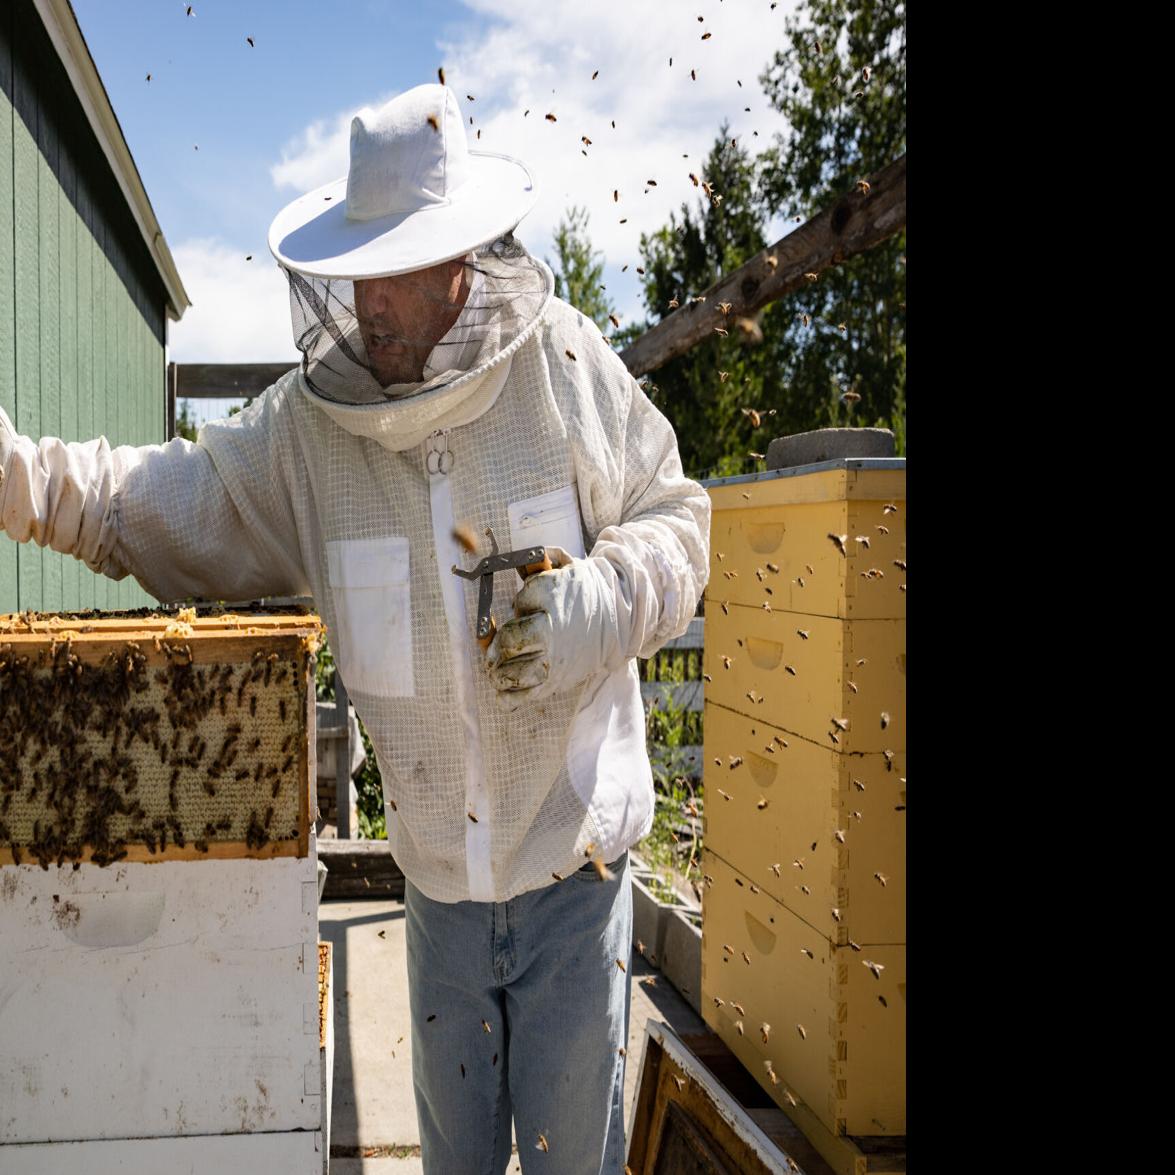 Veterans use beekeeping to improve well being - VA News